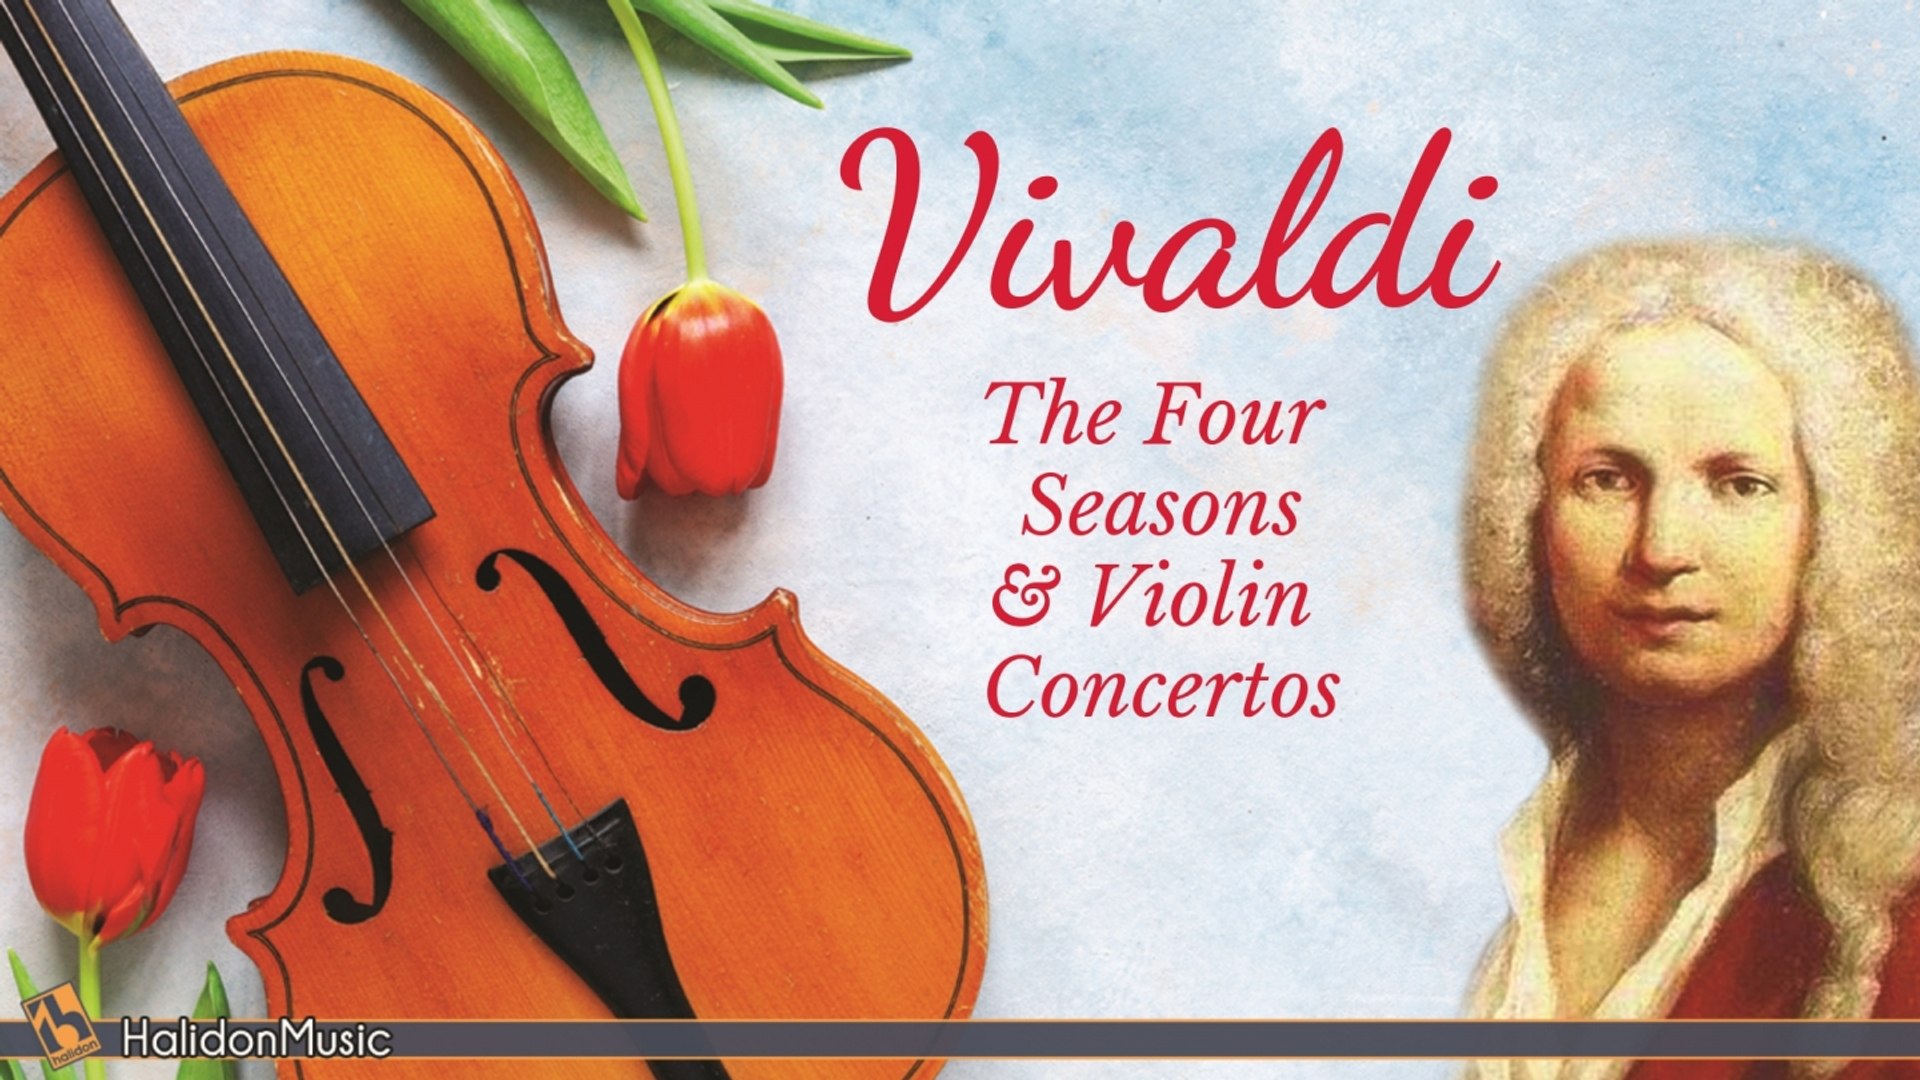 The four seasons violin